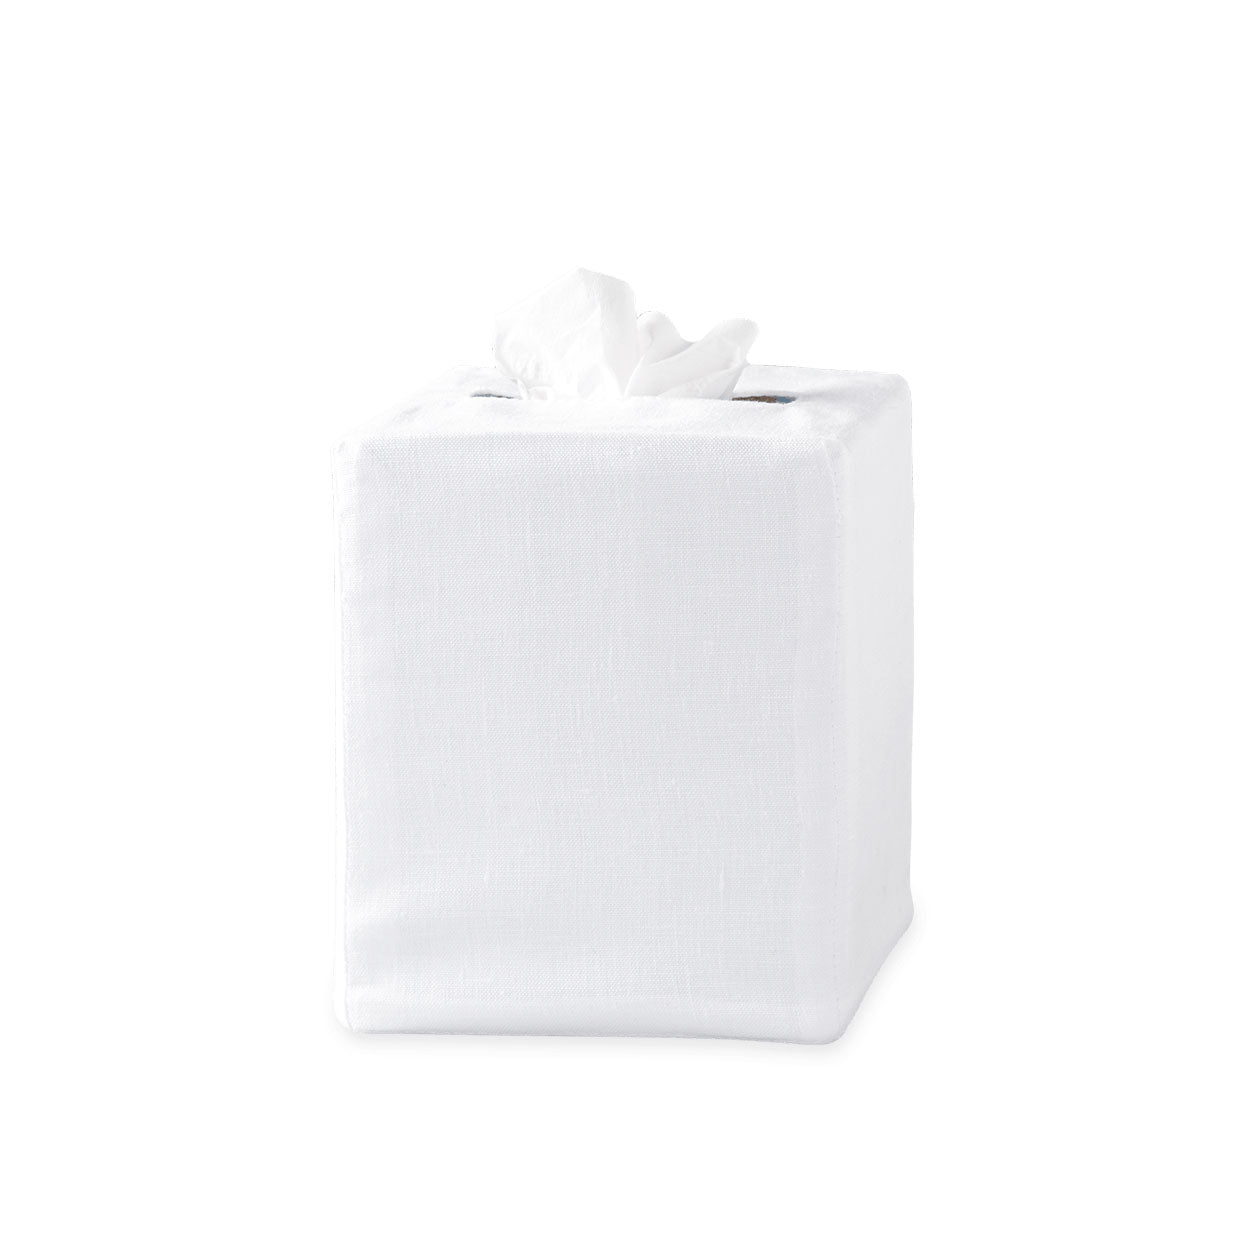 Plain Tissue Box Cover